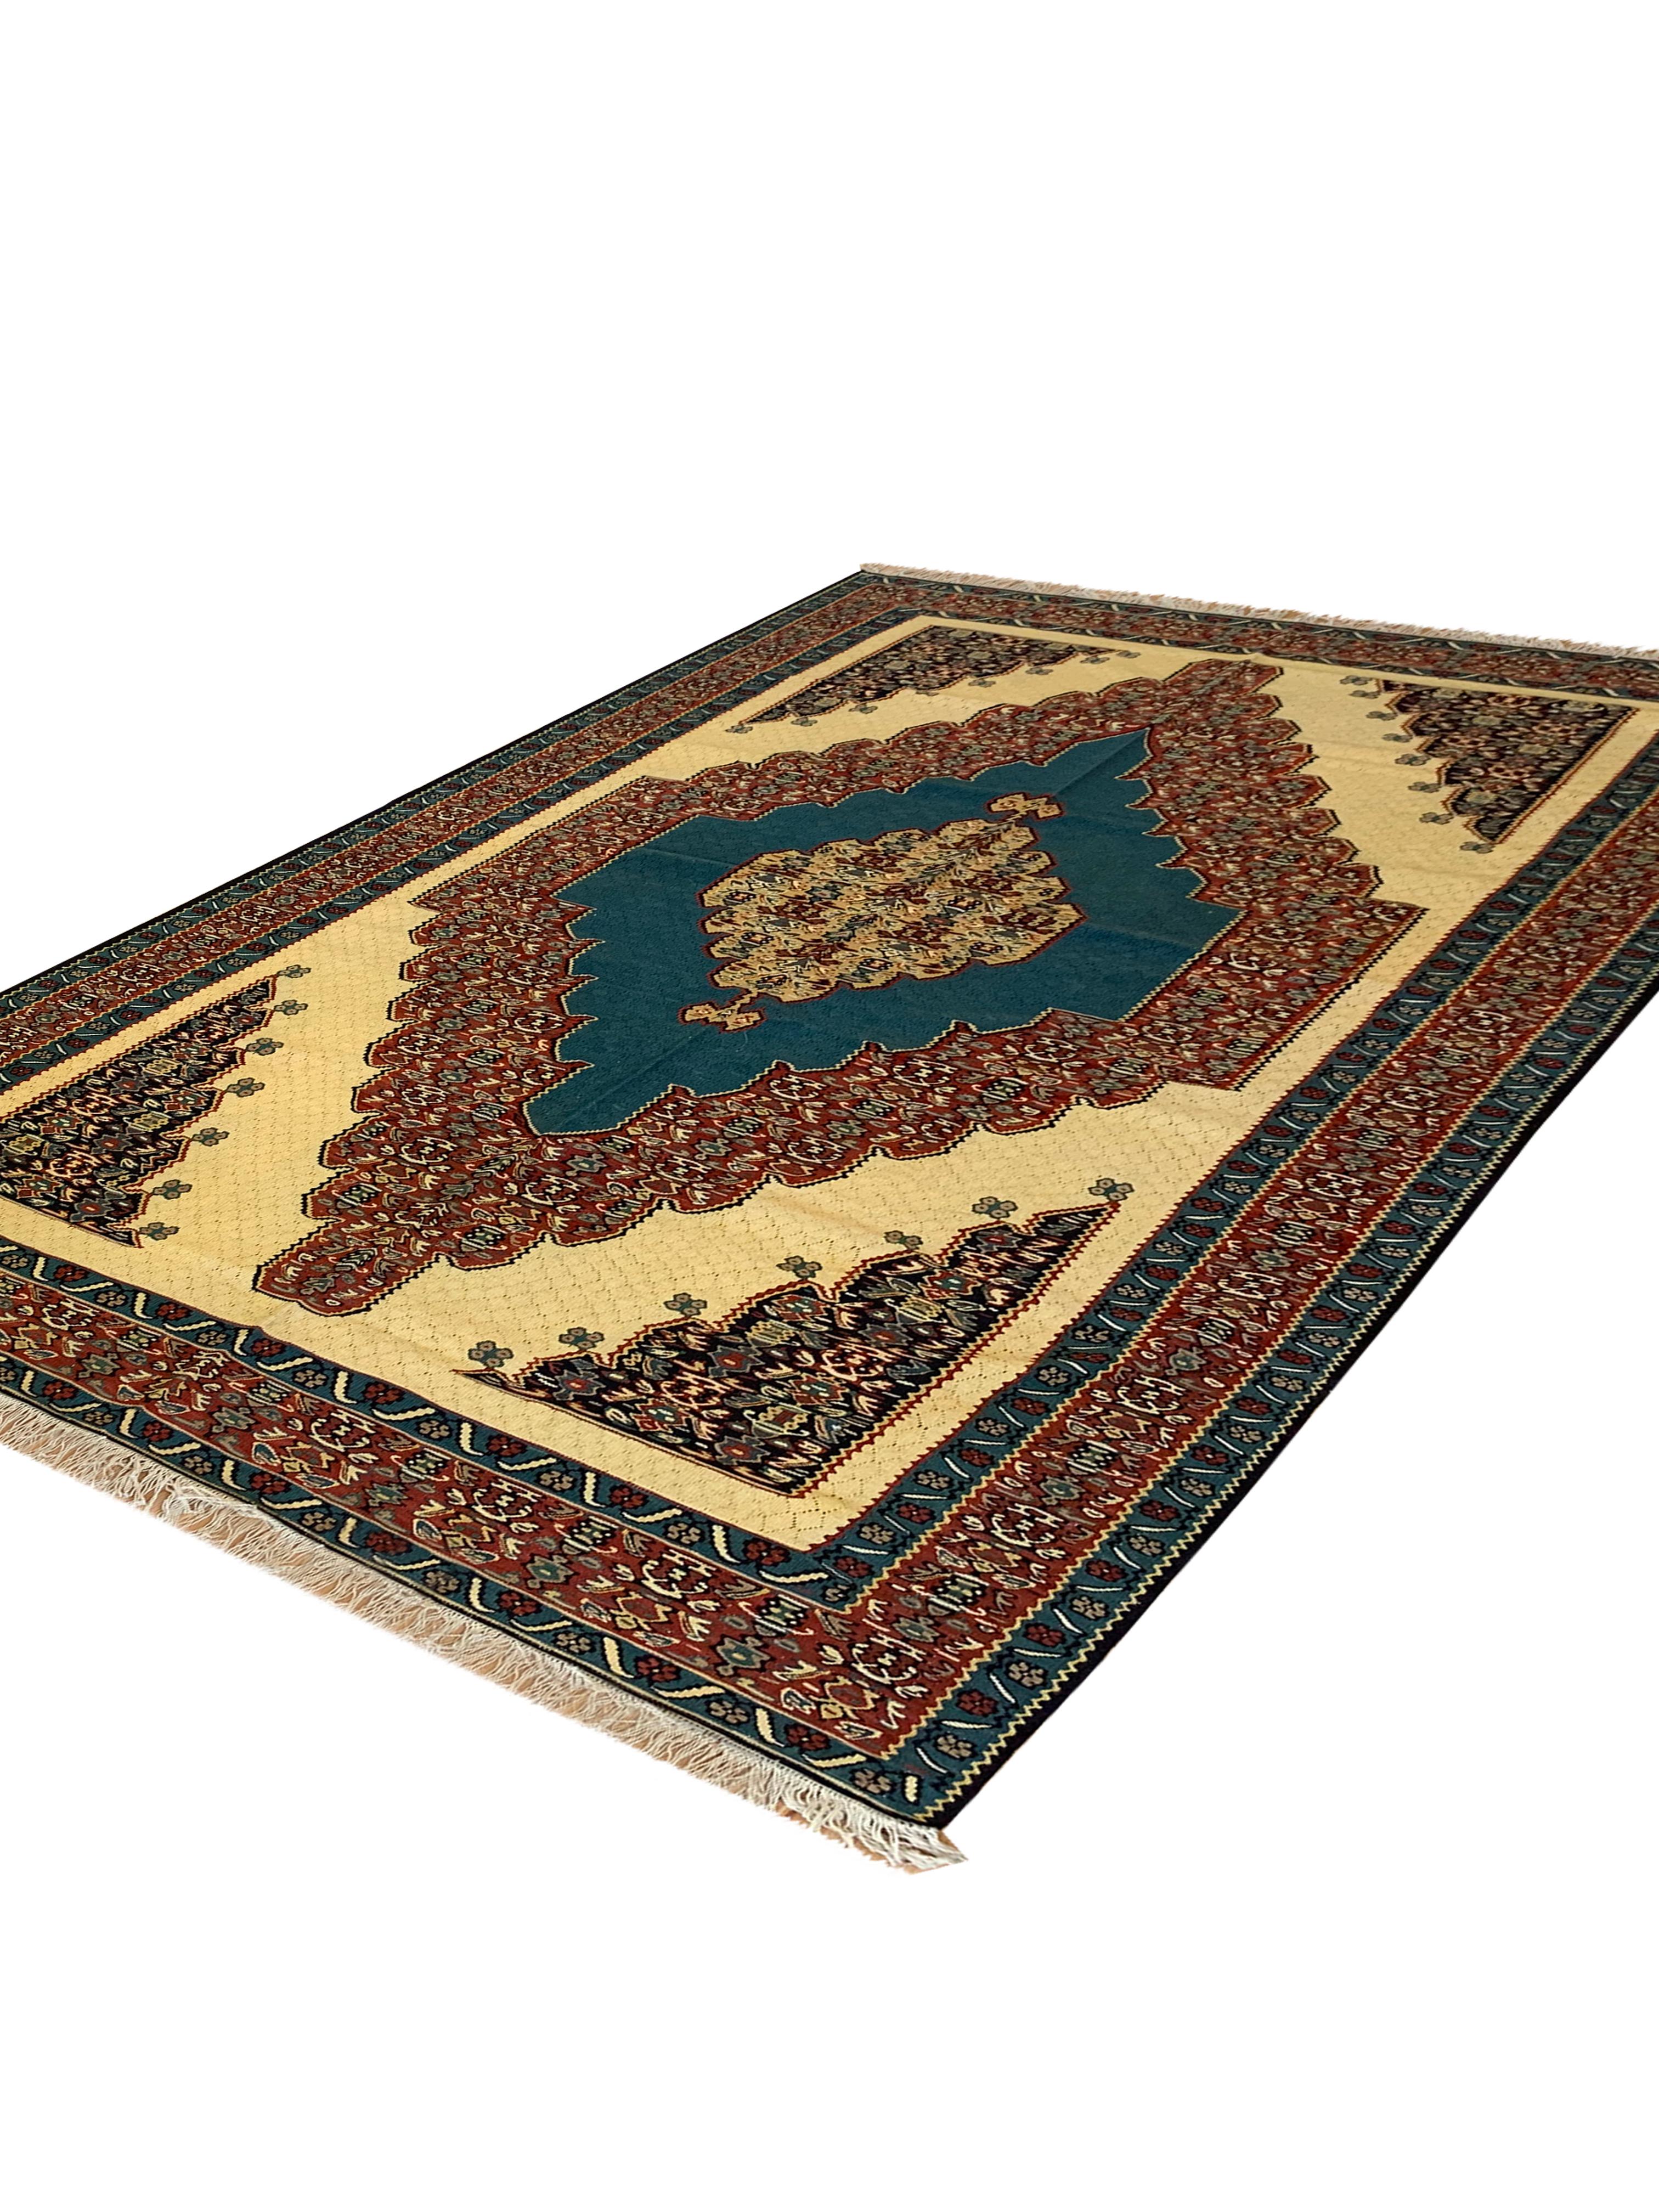 Tribal Flatwoven Carpet Beige Blue Wool Kilim Handmade Oriental Living Area Rug For Sale